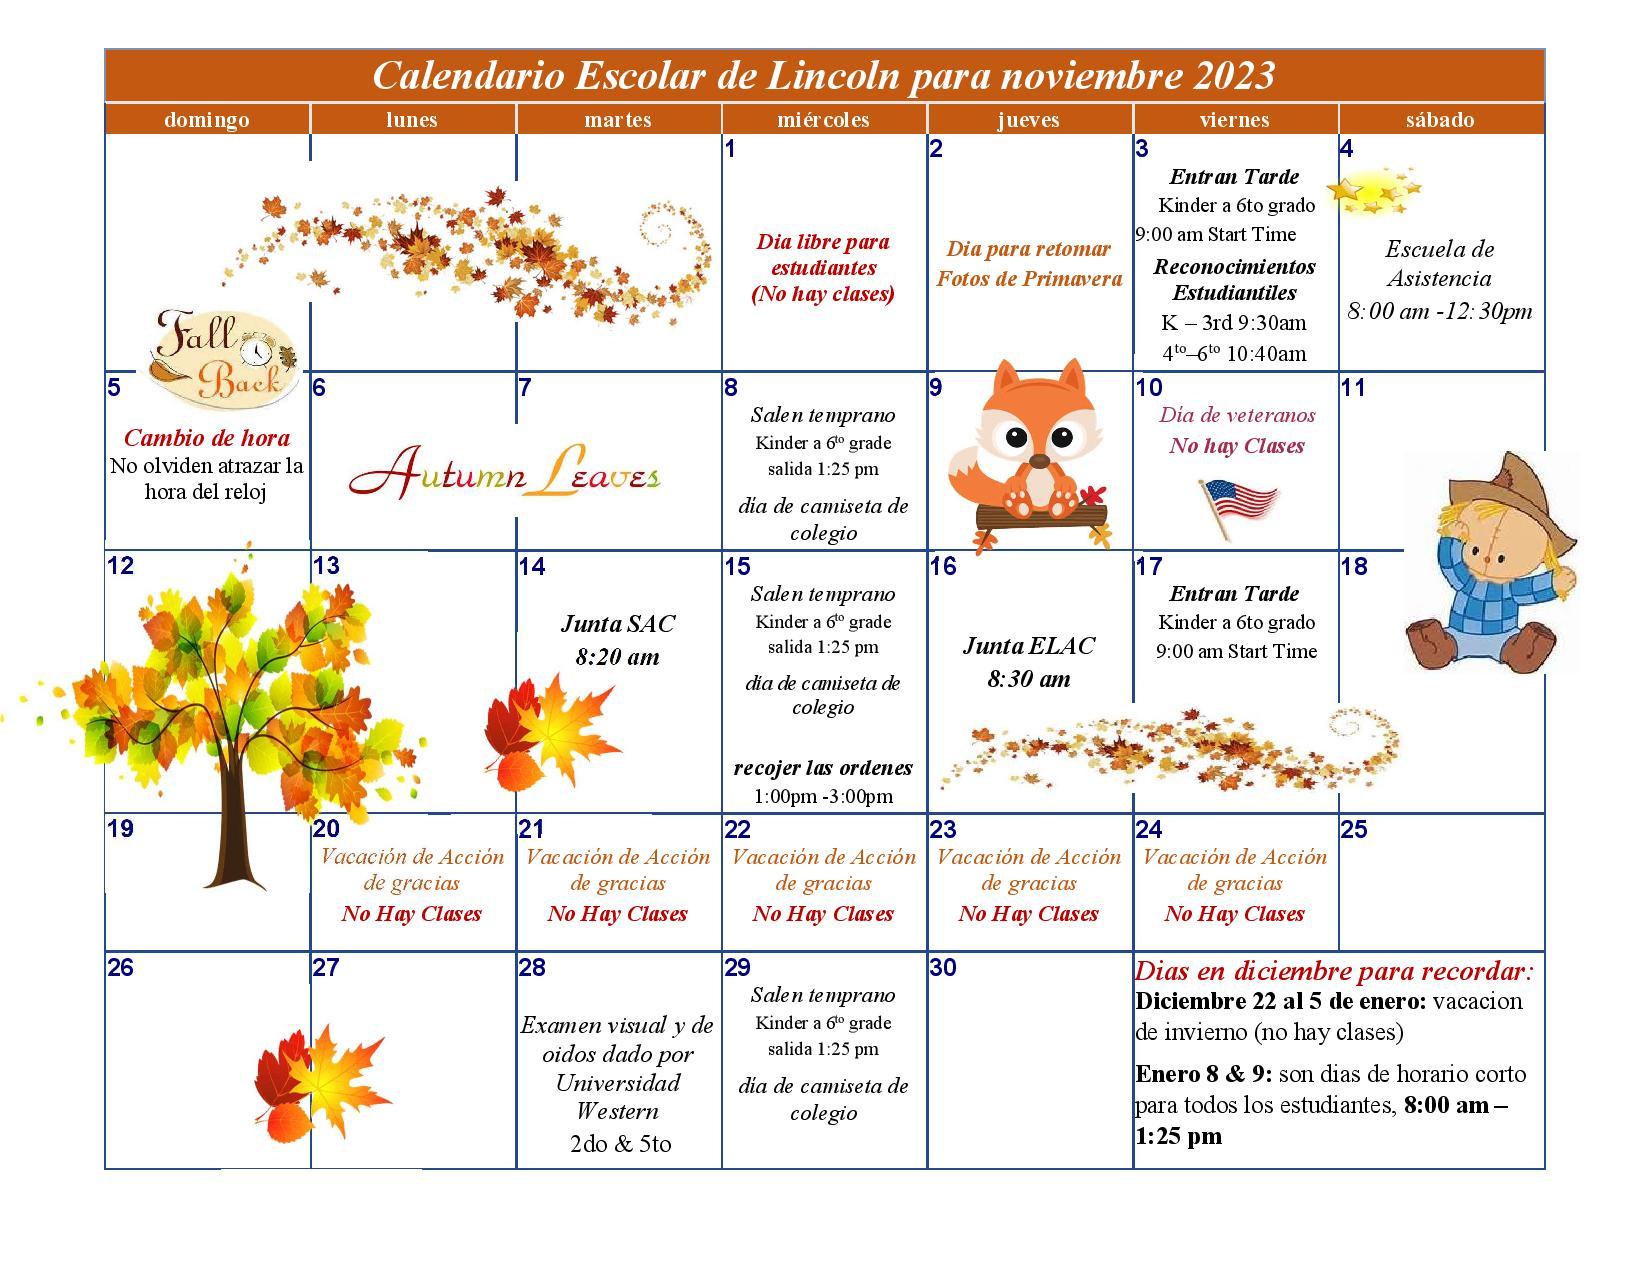 Lincoln Elementary November Calendar 